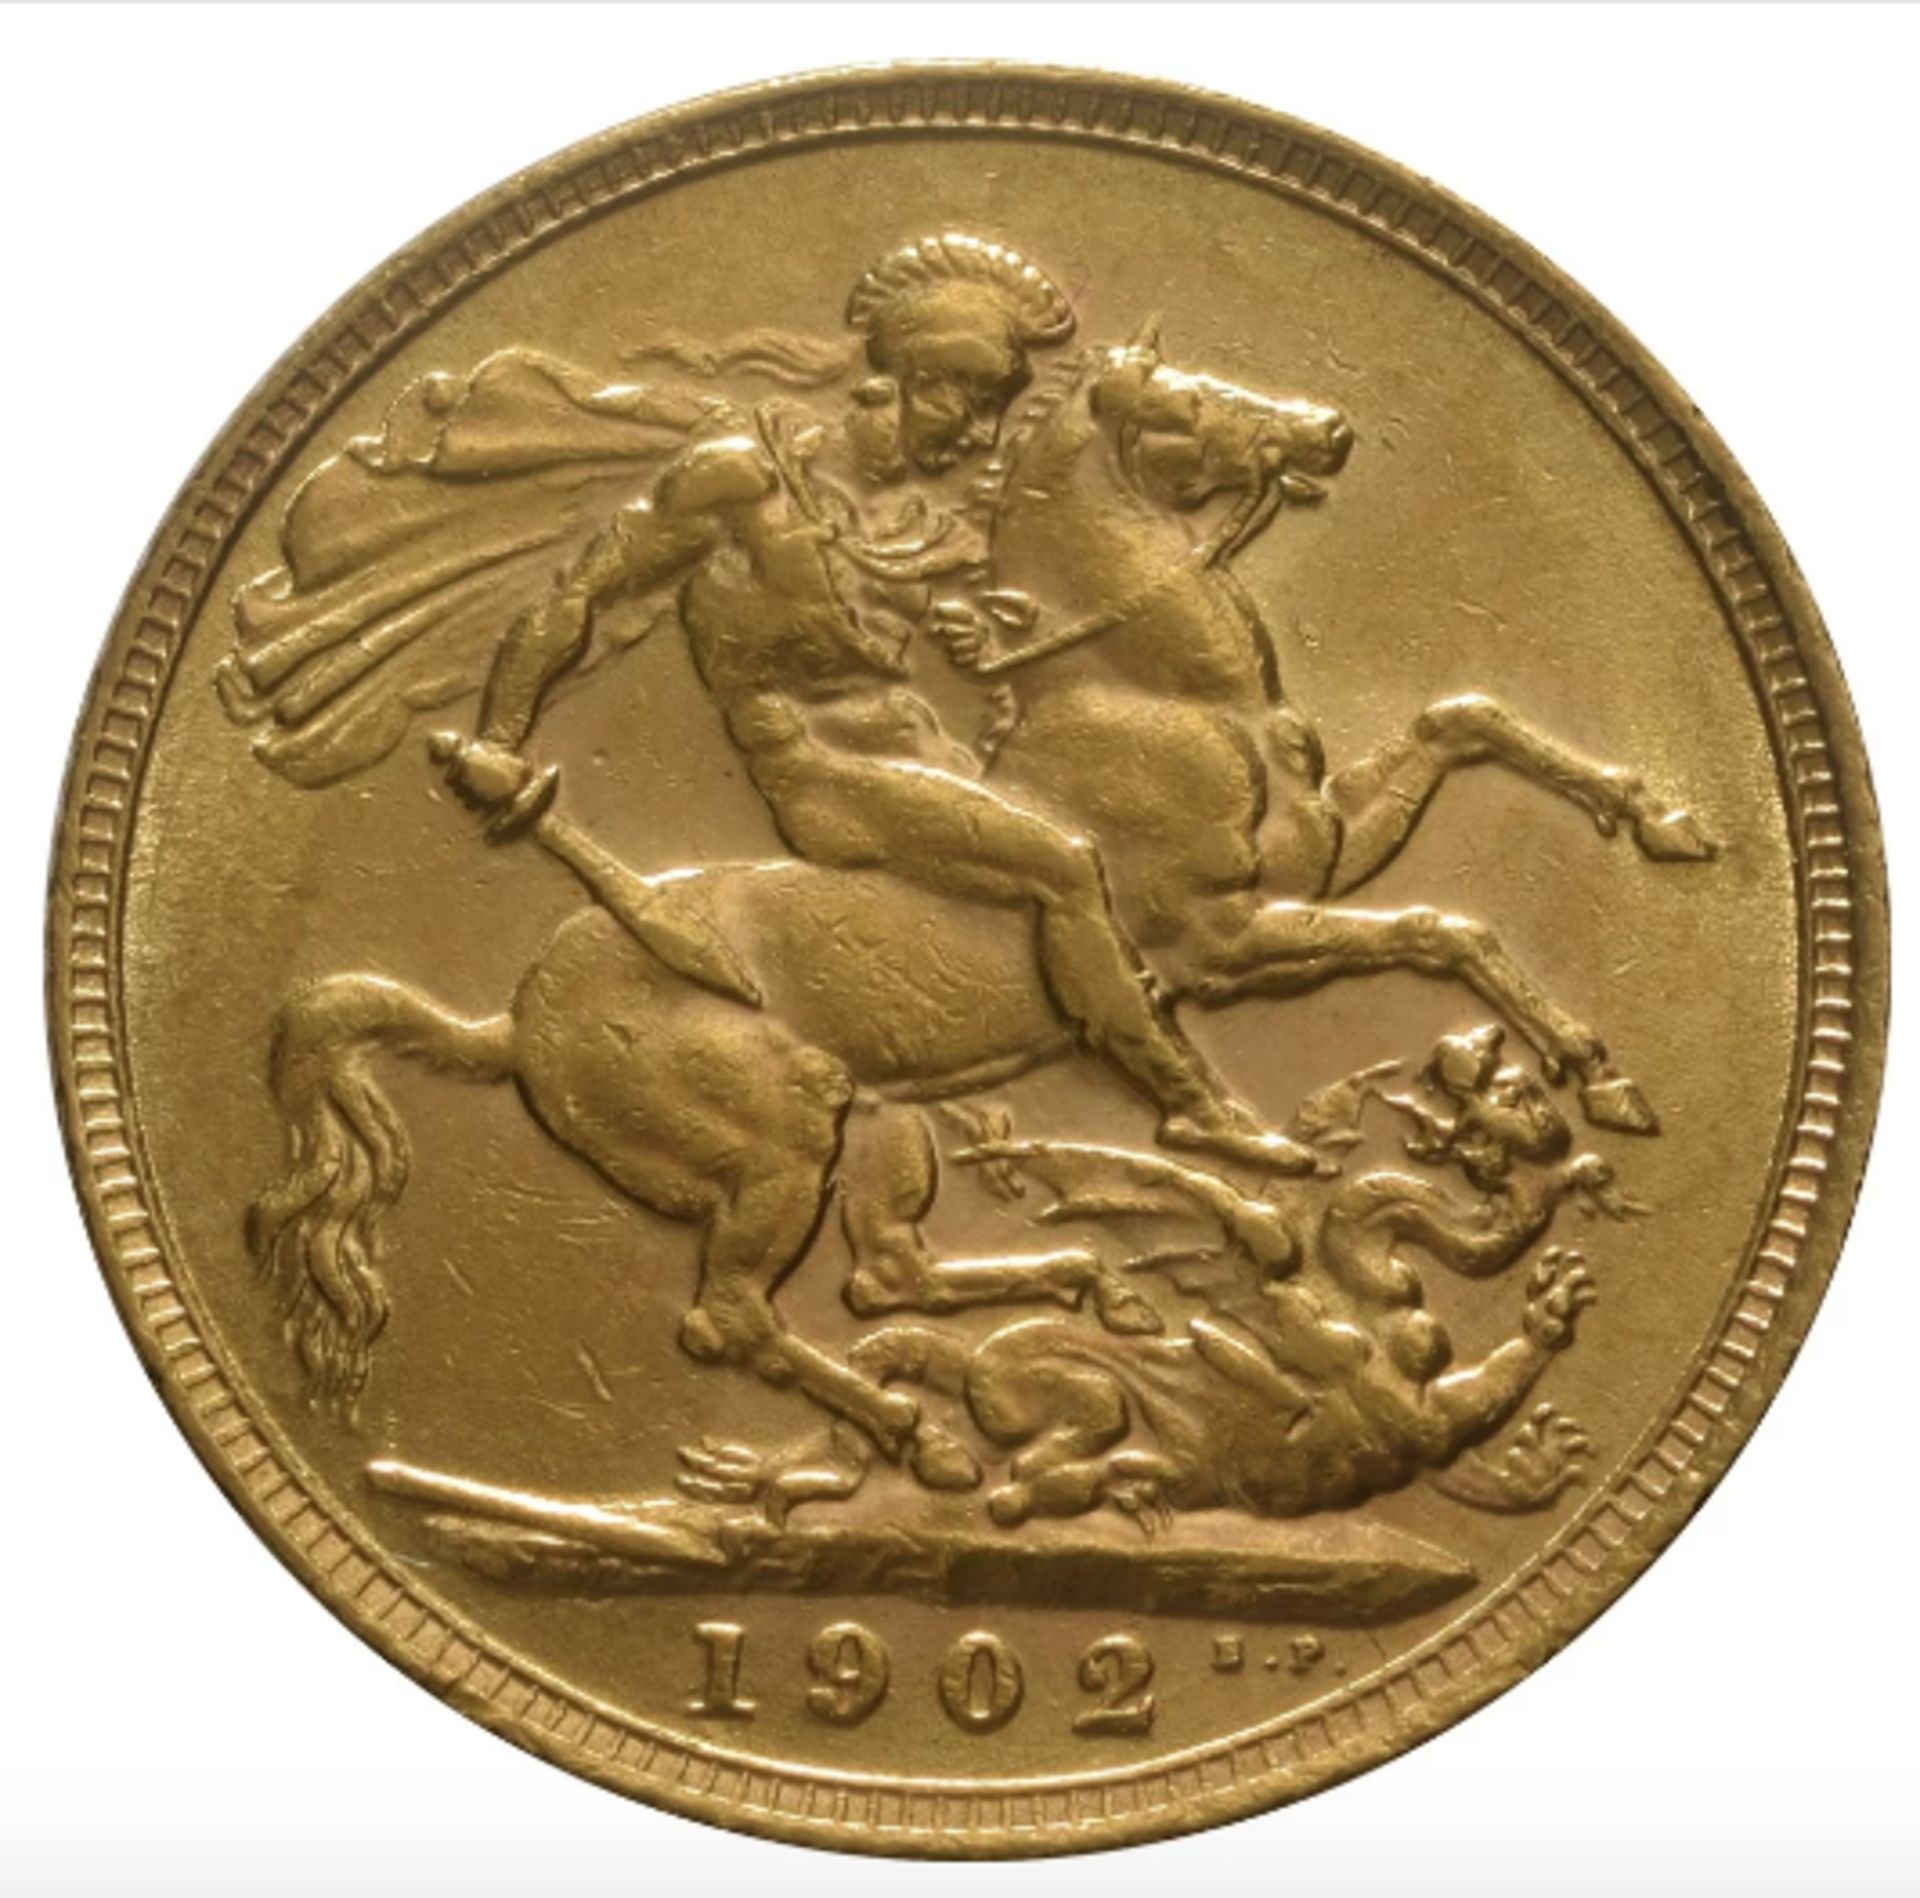 1902 - Full Gold Sovereign - King Edwards VII - London